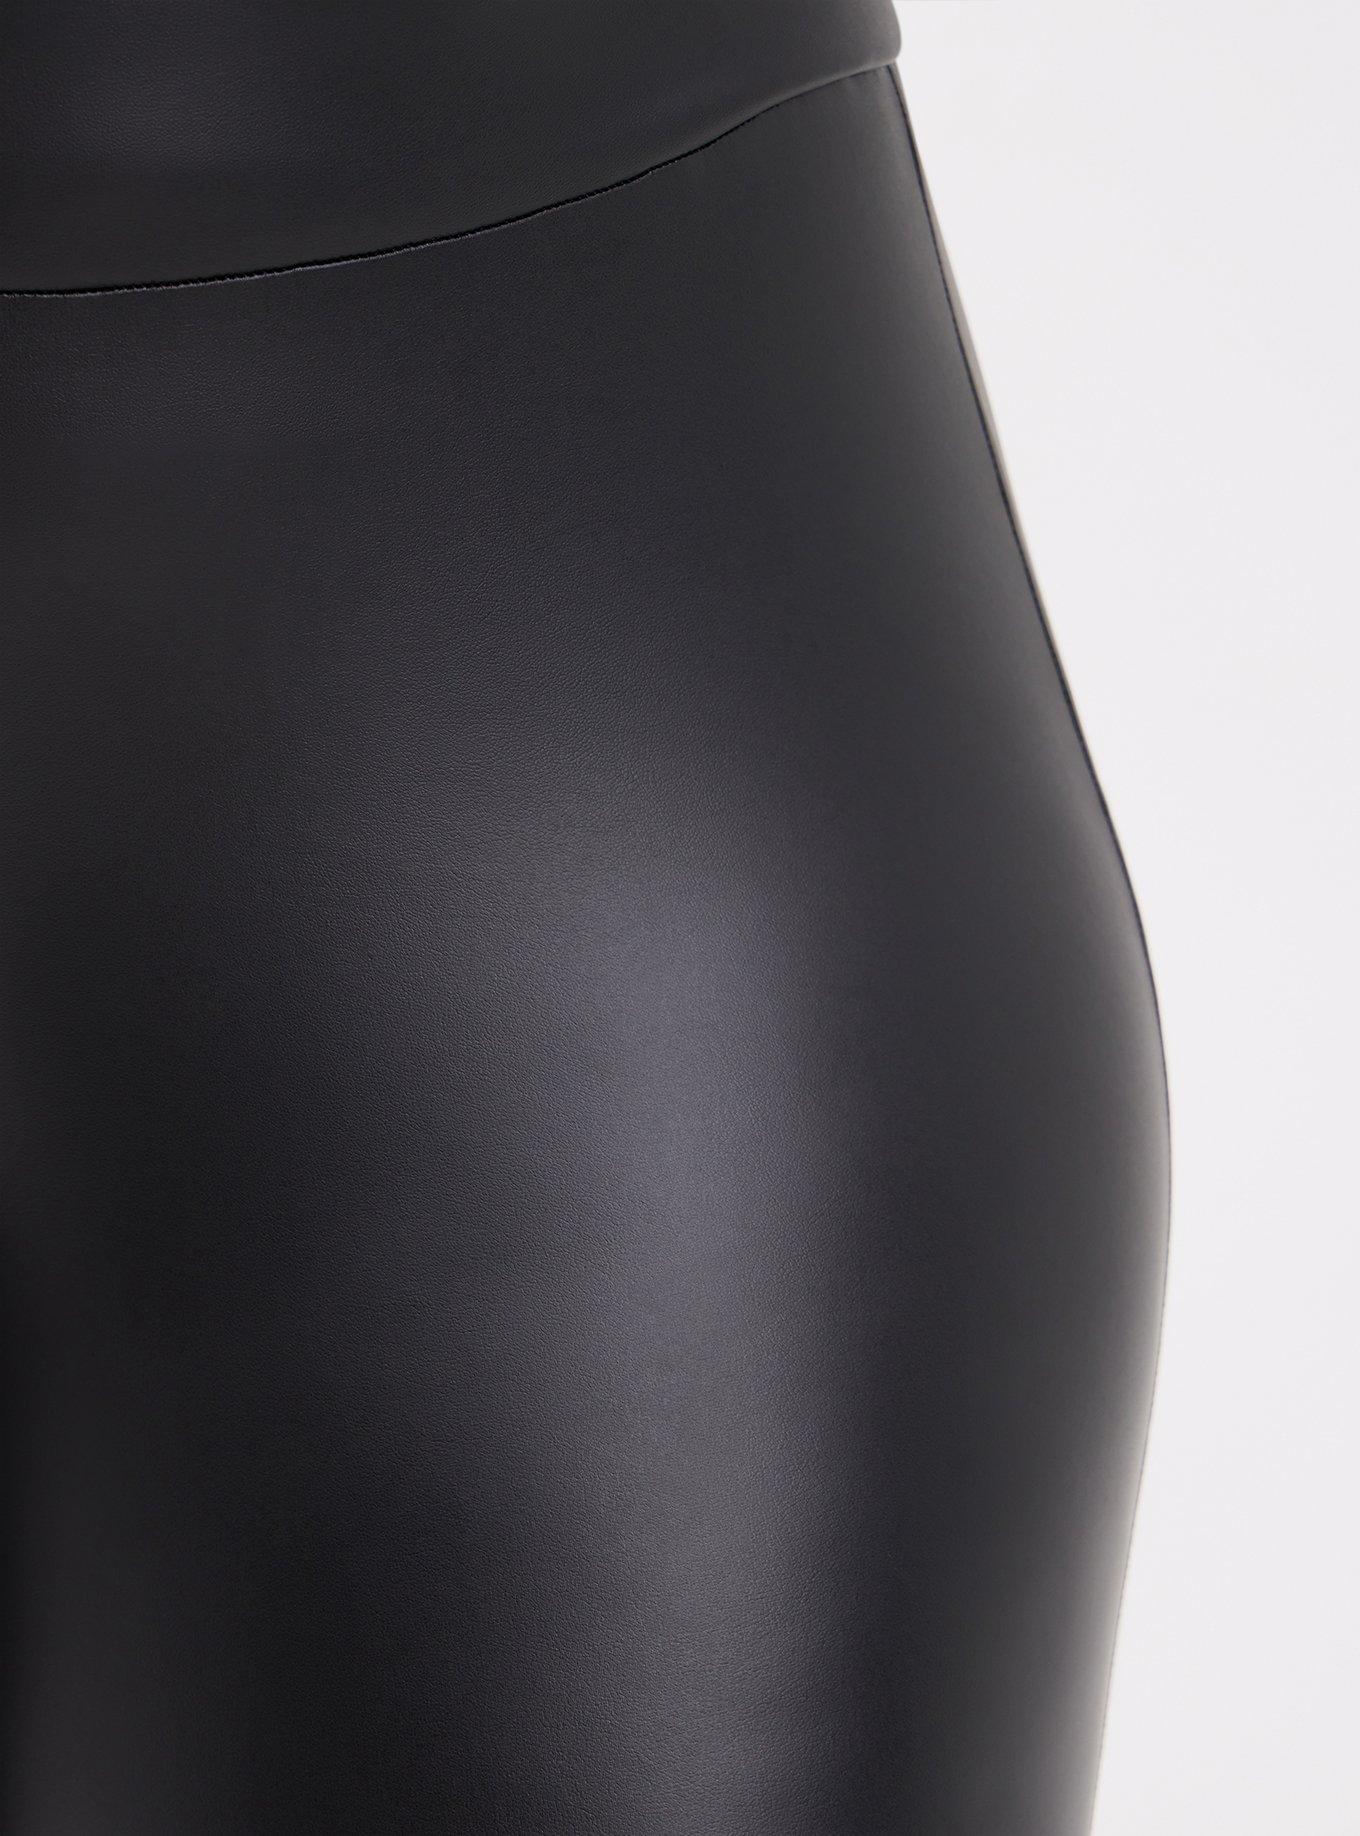 Plus Size - Full Length Signature Waist Faux Leather Legging - Torrid